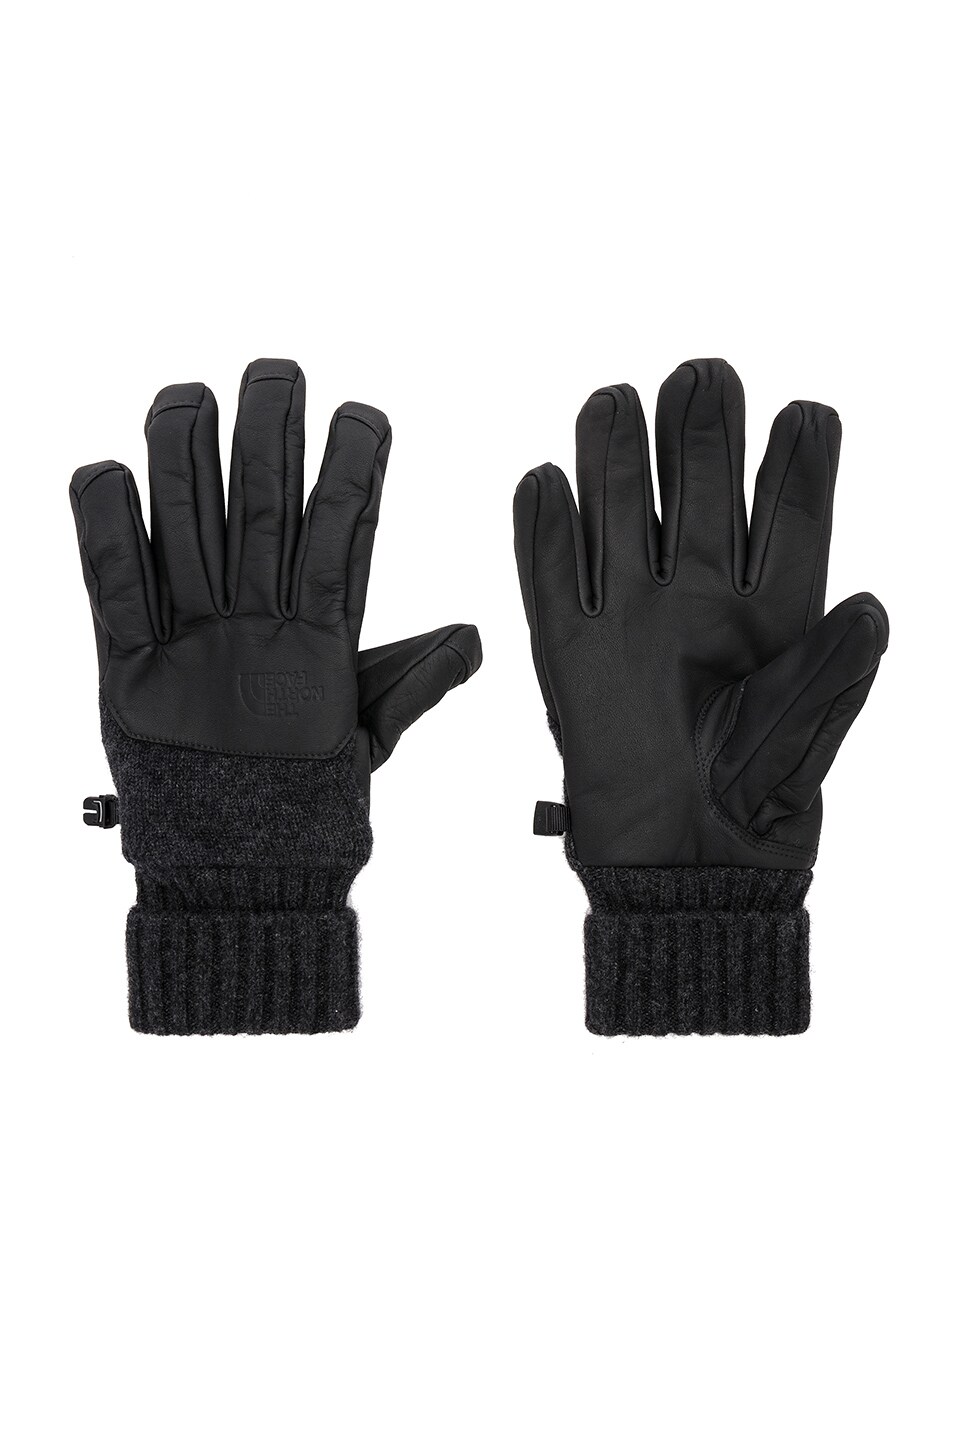 north face cryos gloves 